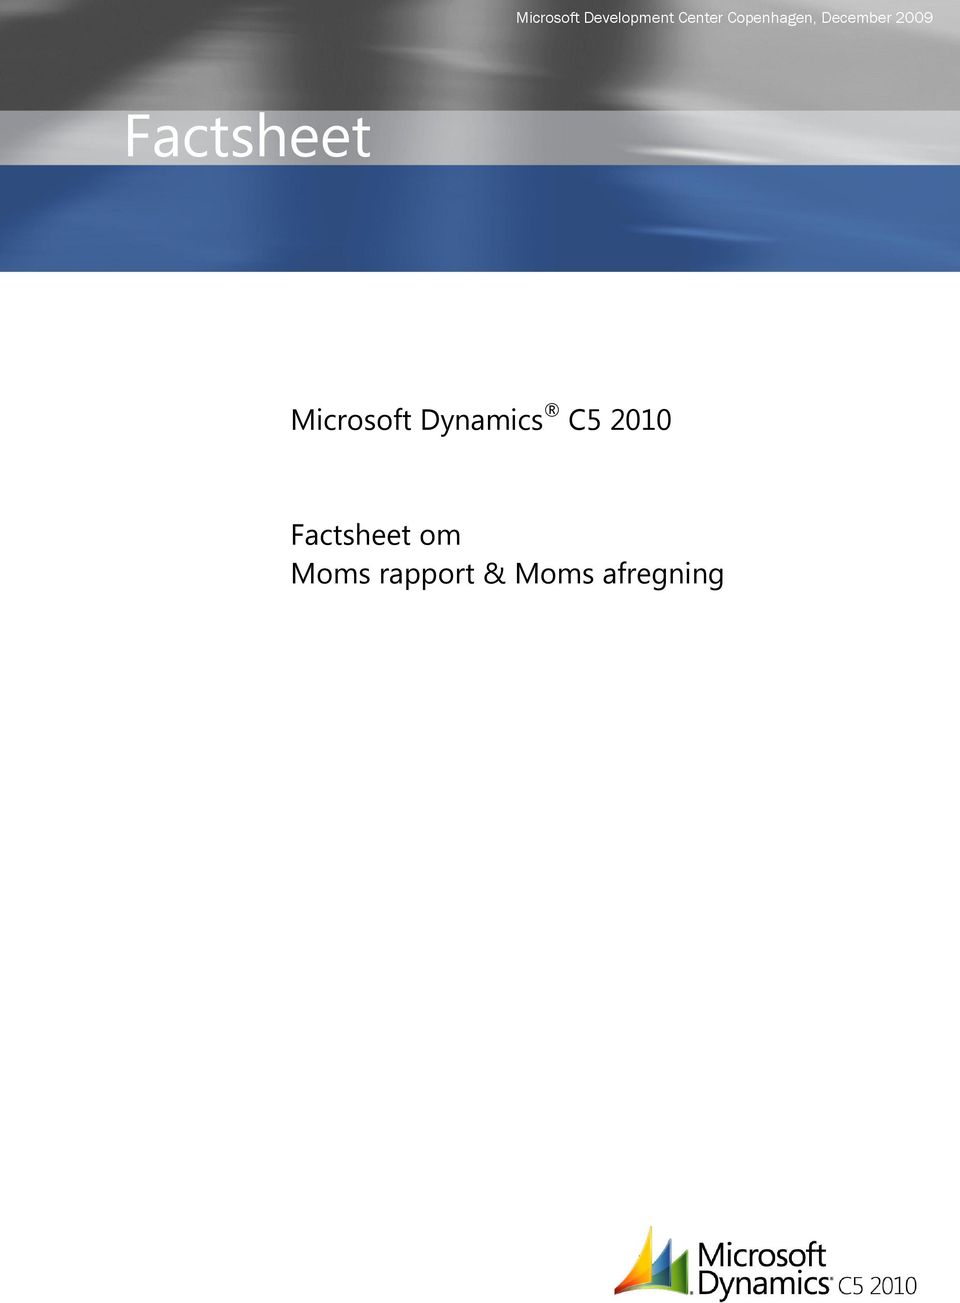 Factsheet Microsoft Dynamics C5